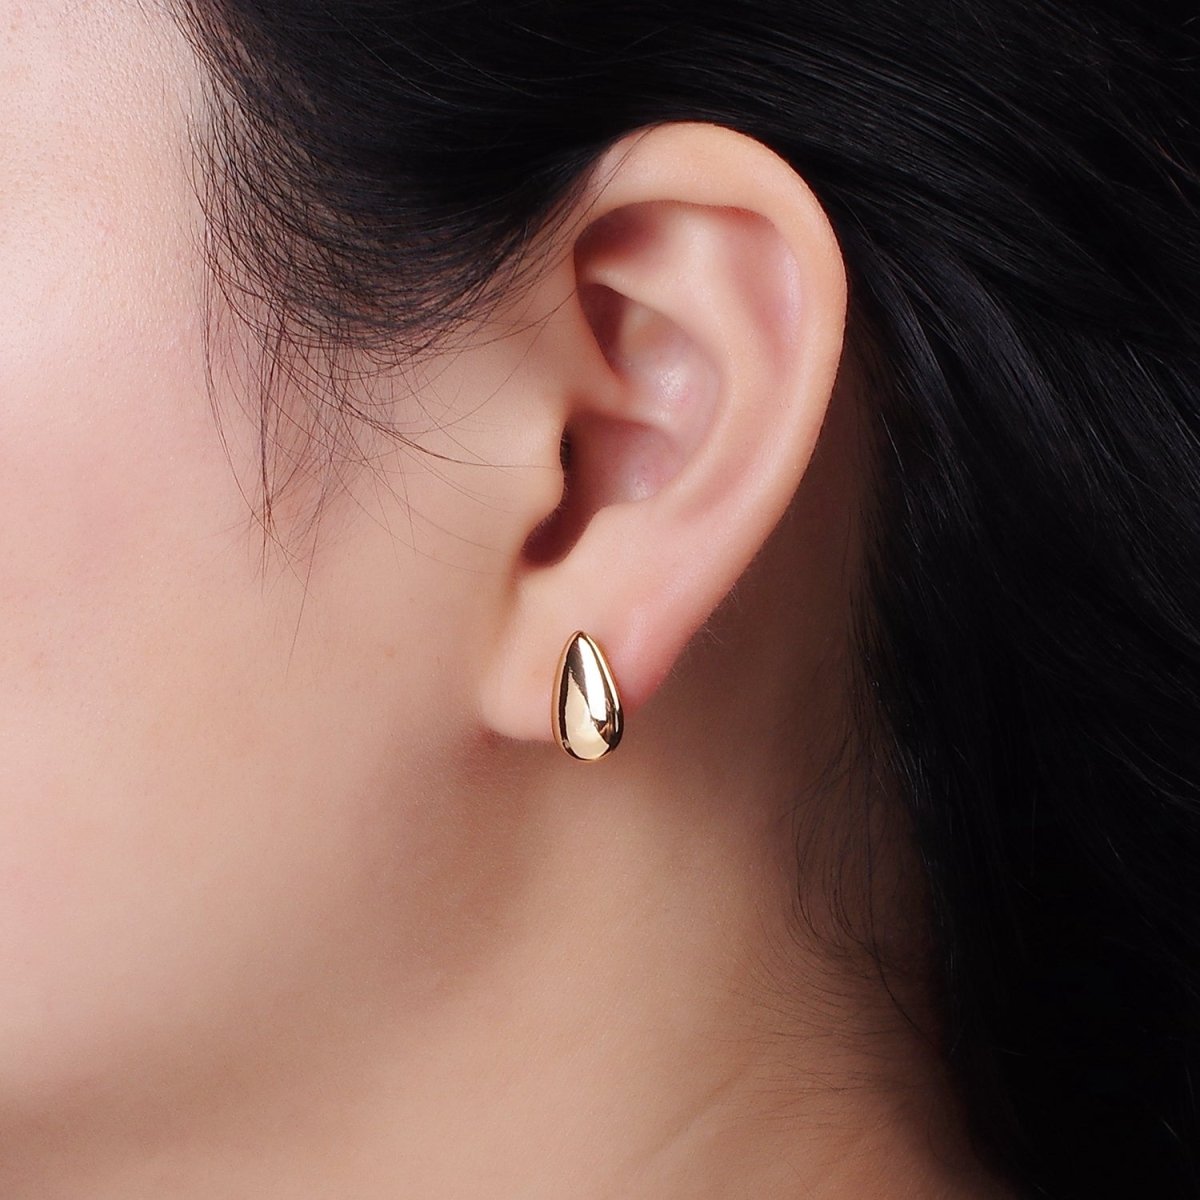 OS 16K Gold Filled 13mm Teardrop Minimalist Stud Earrings | AE894 - DLUXCA